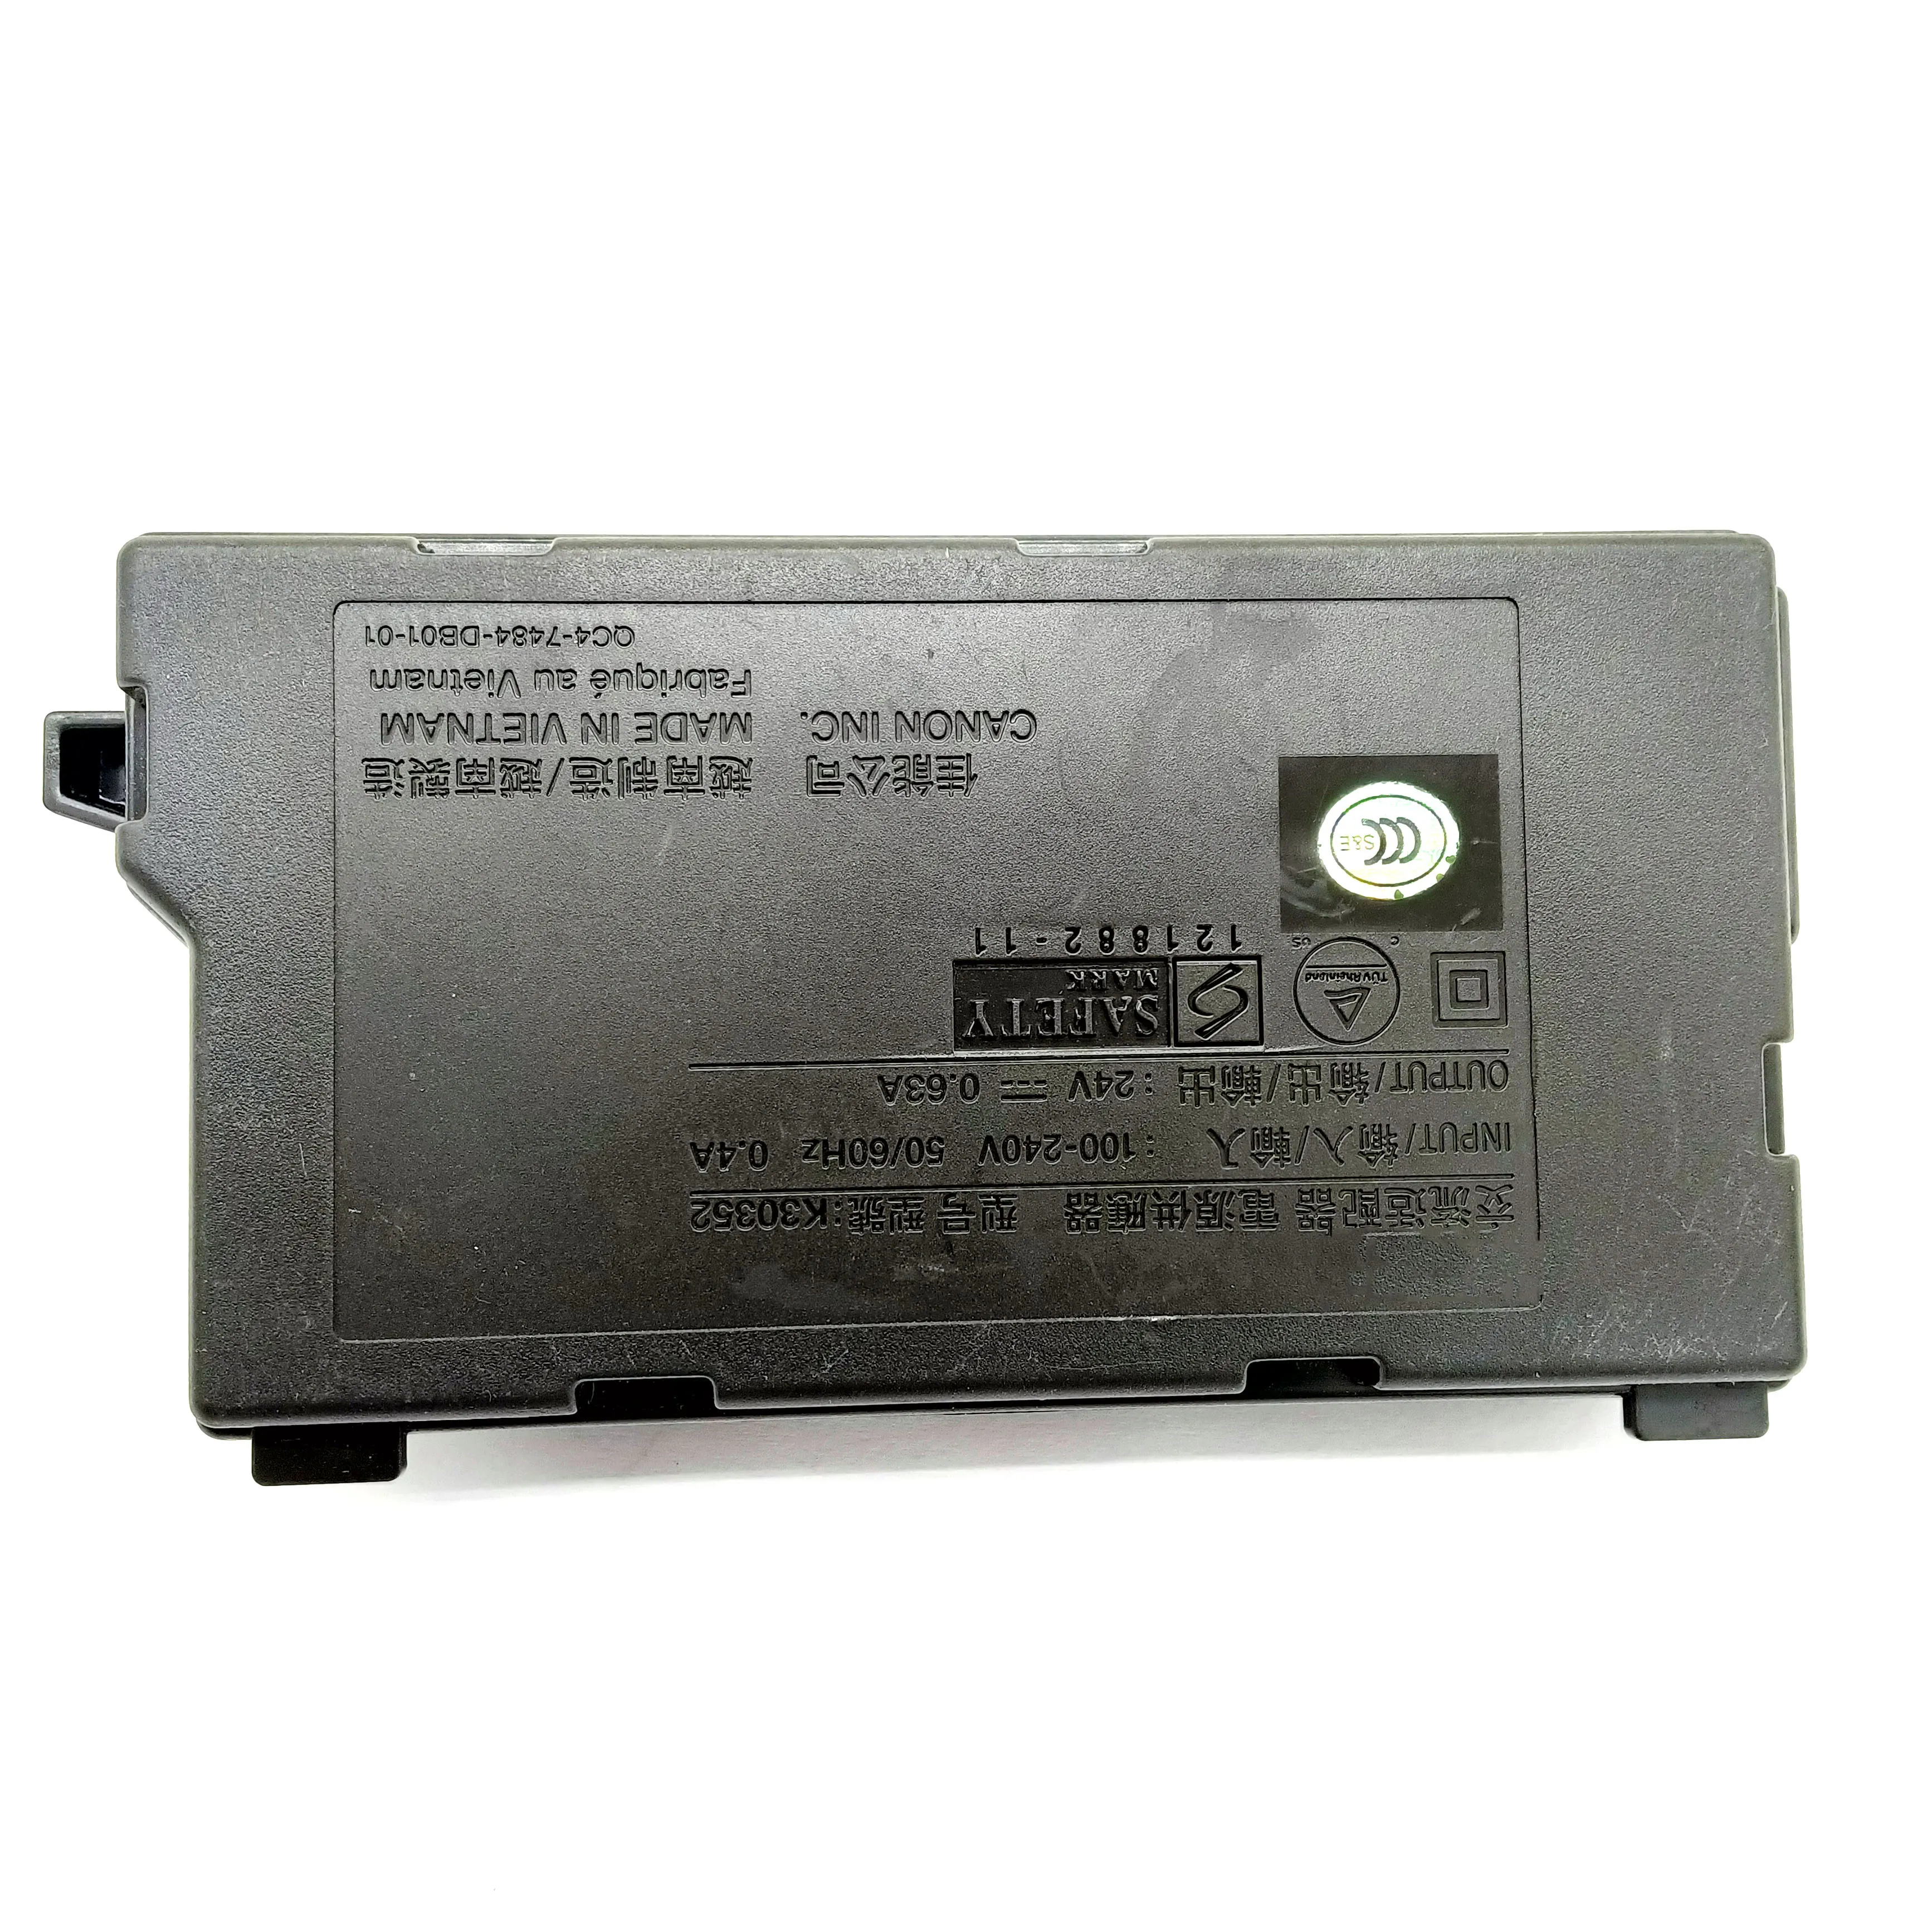 

Power Supply Adapter k30352 Fits For Canon PIXMA MG2922 MG2522 TS3122 TS3120 IP2820S MG2520S TS202 MG2520 IP2820 MG3022 MG3020